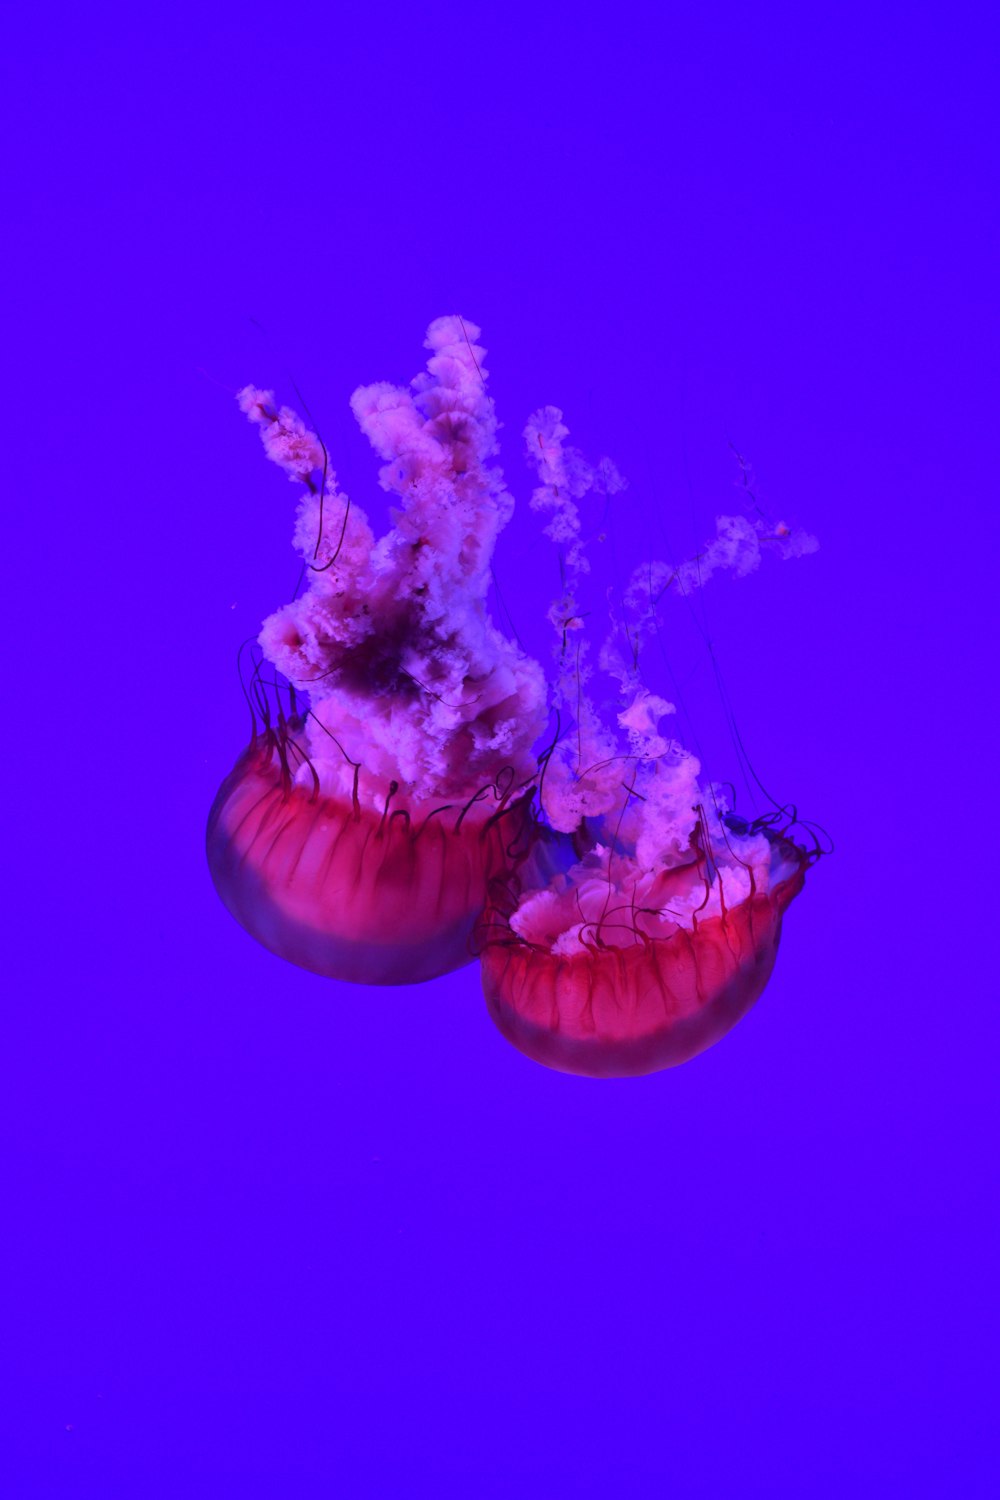 fotografia subacquea di meduse rosse